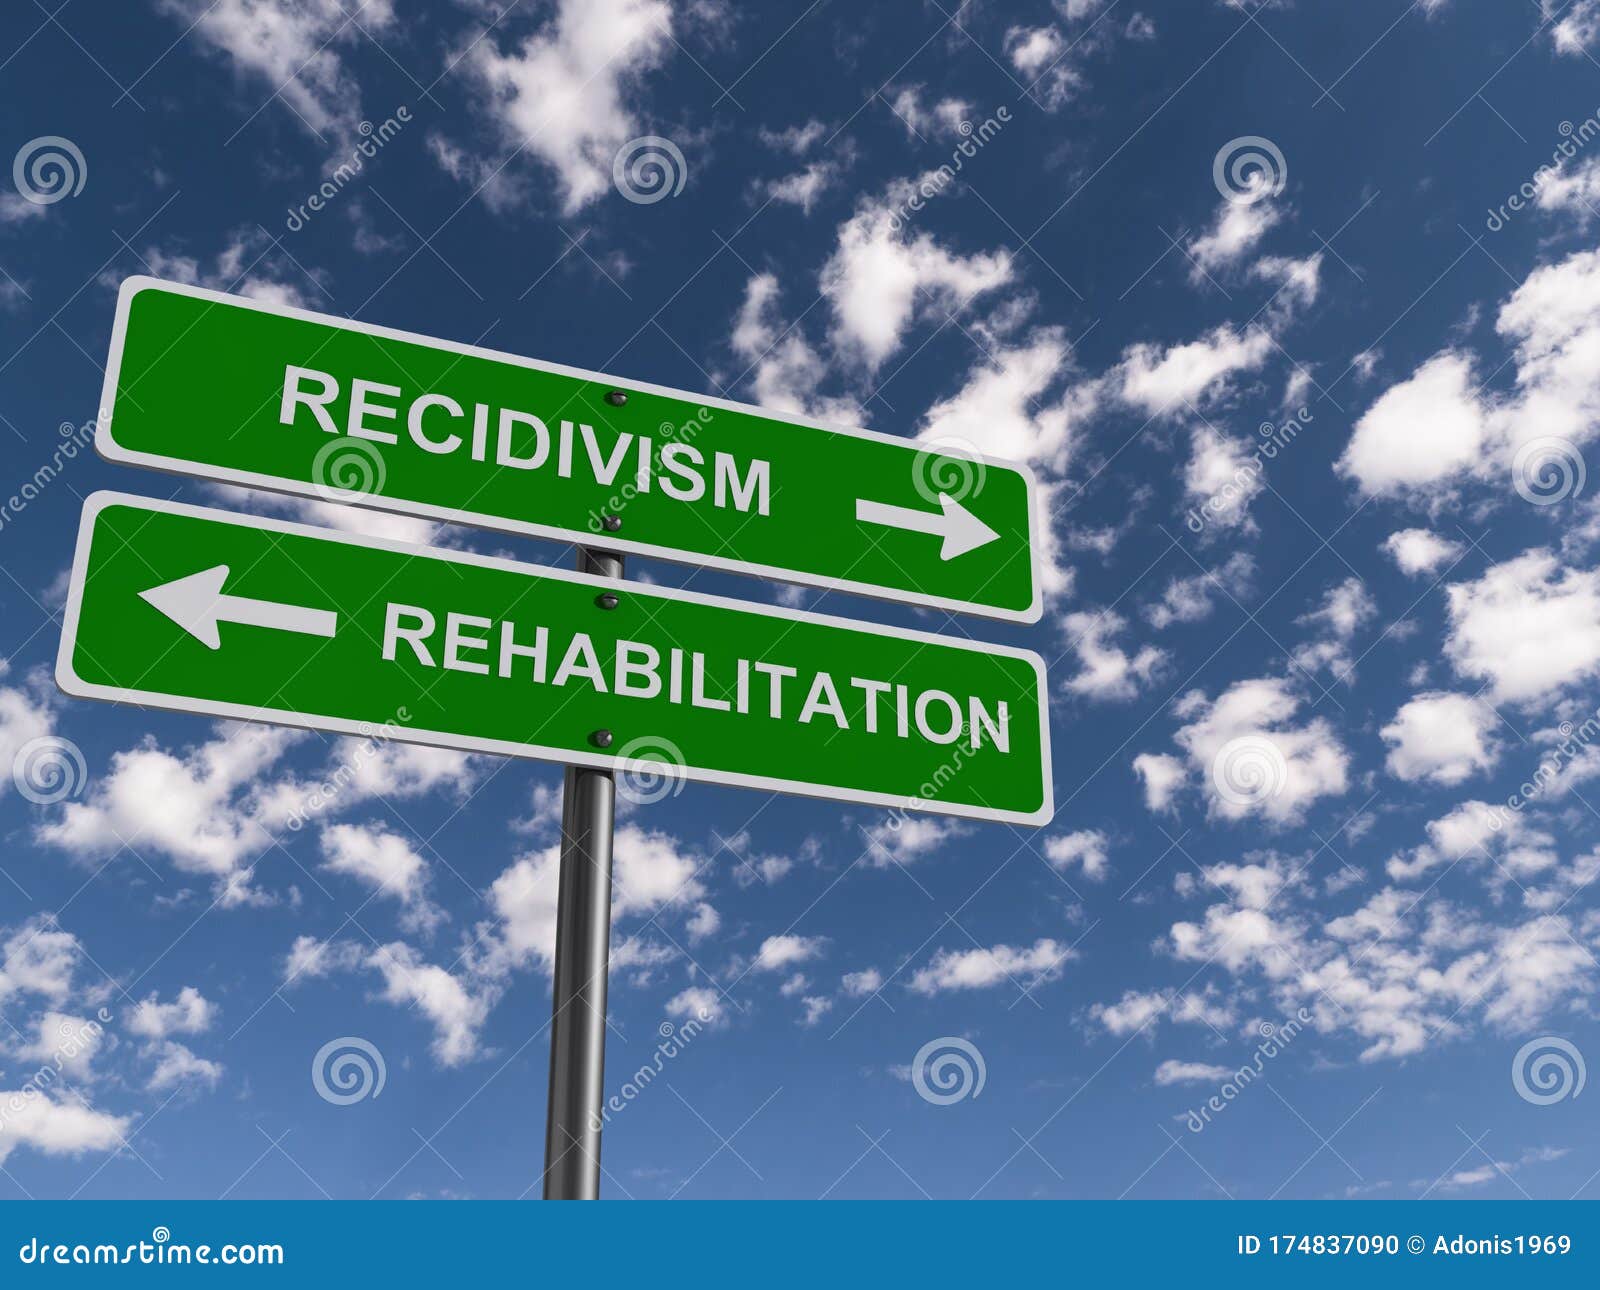 recidivism rehabilitation traffic sign